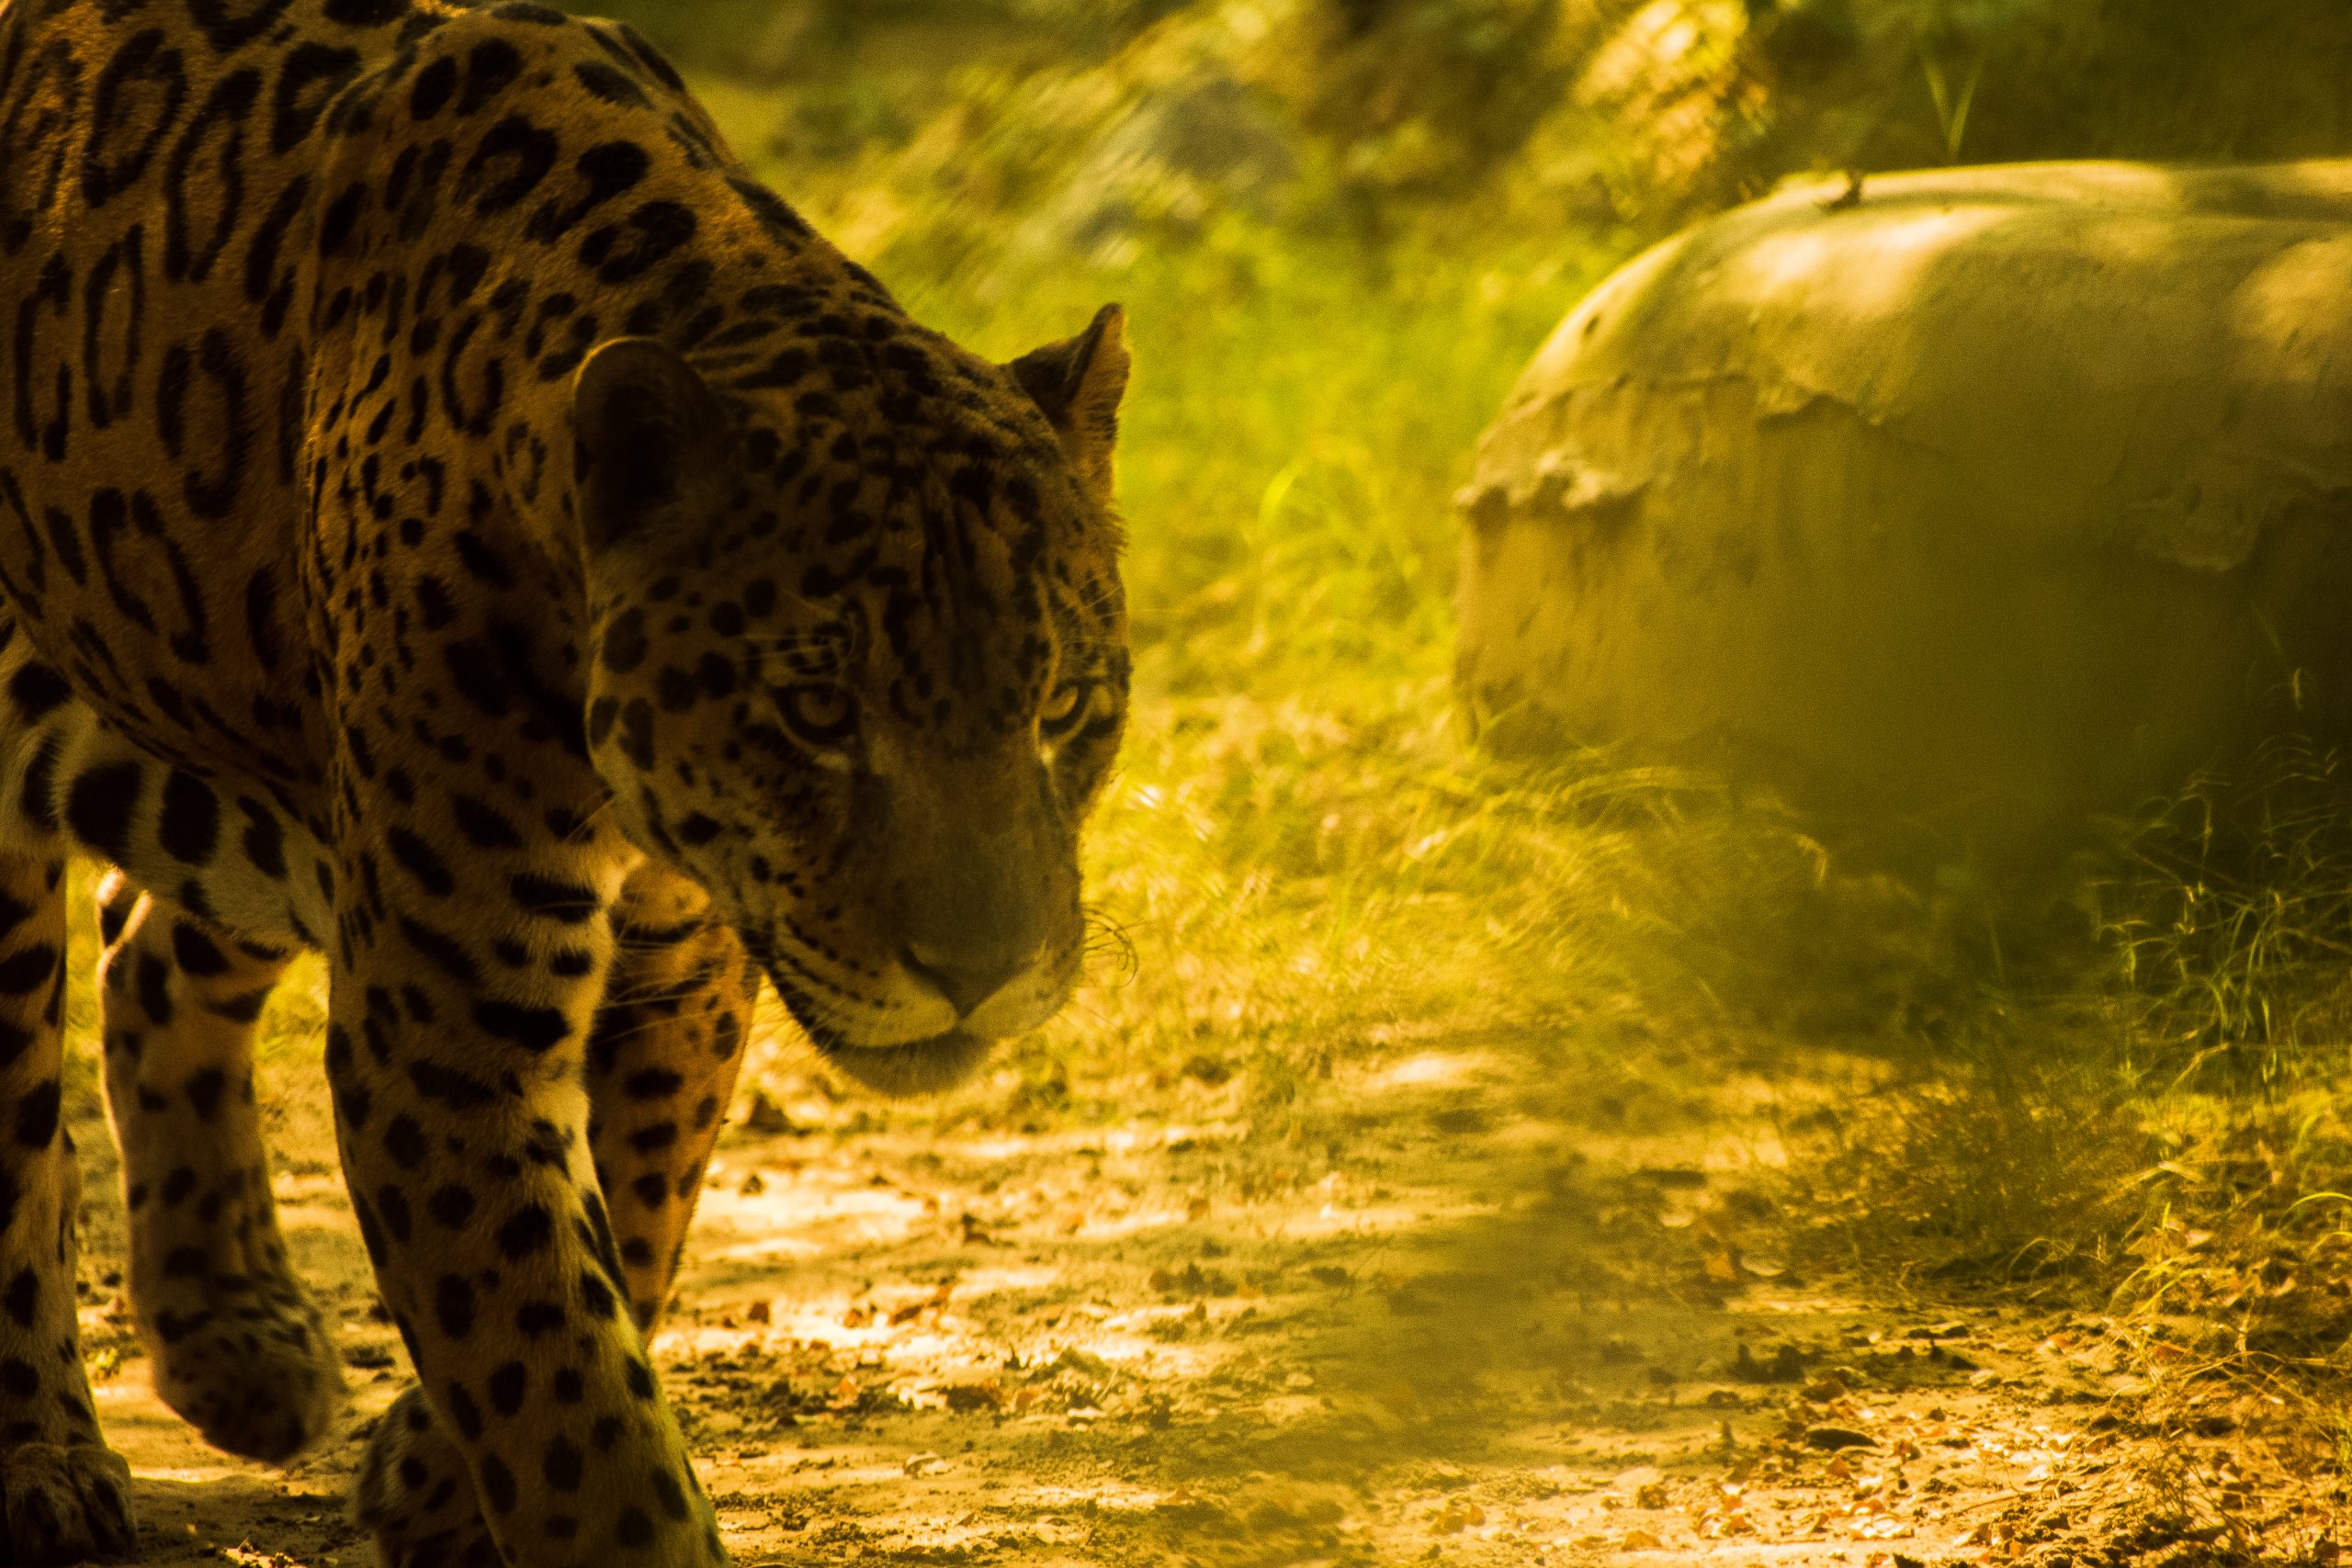 Jaguar on the prowl